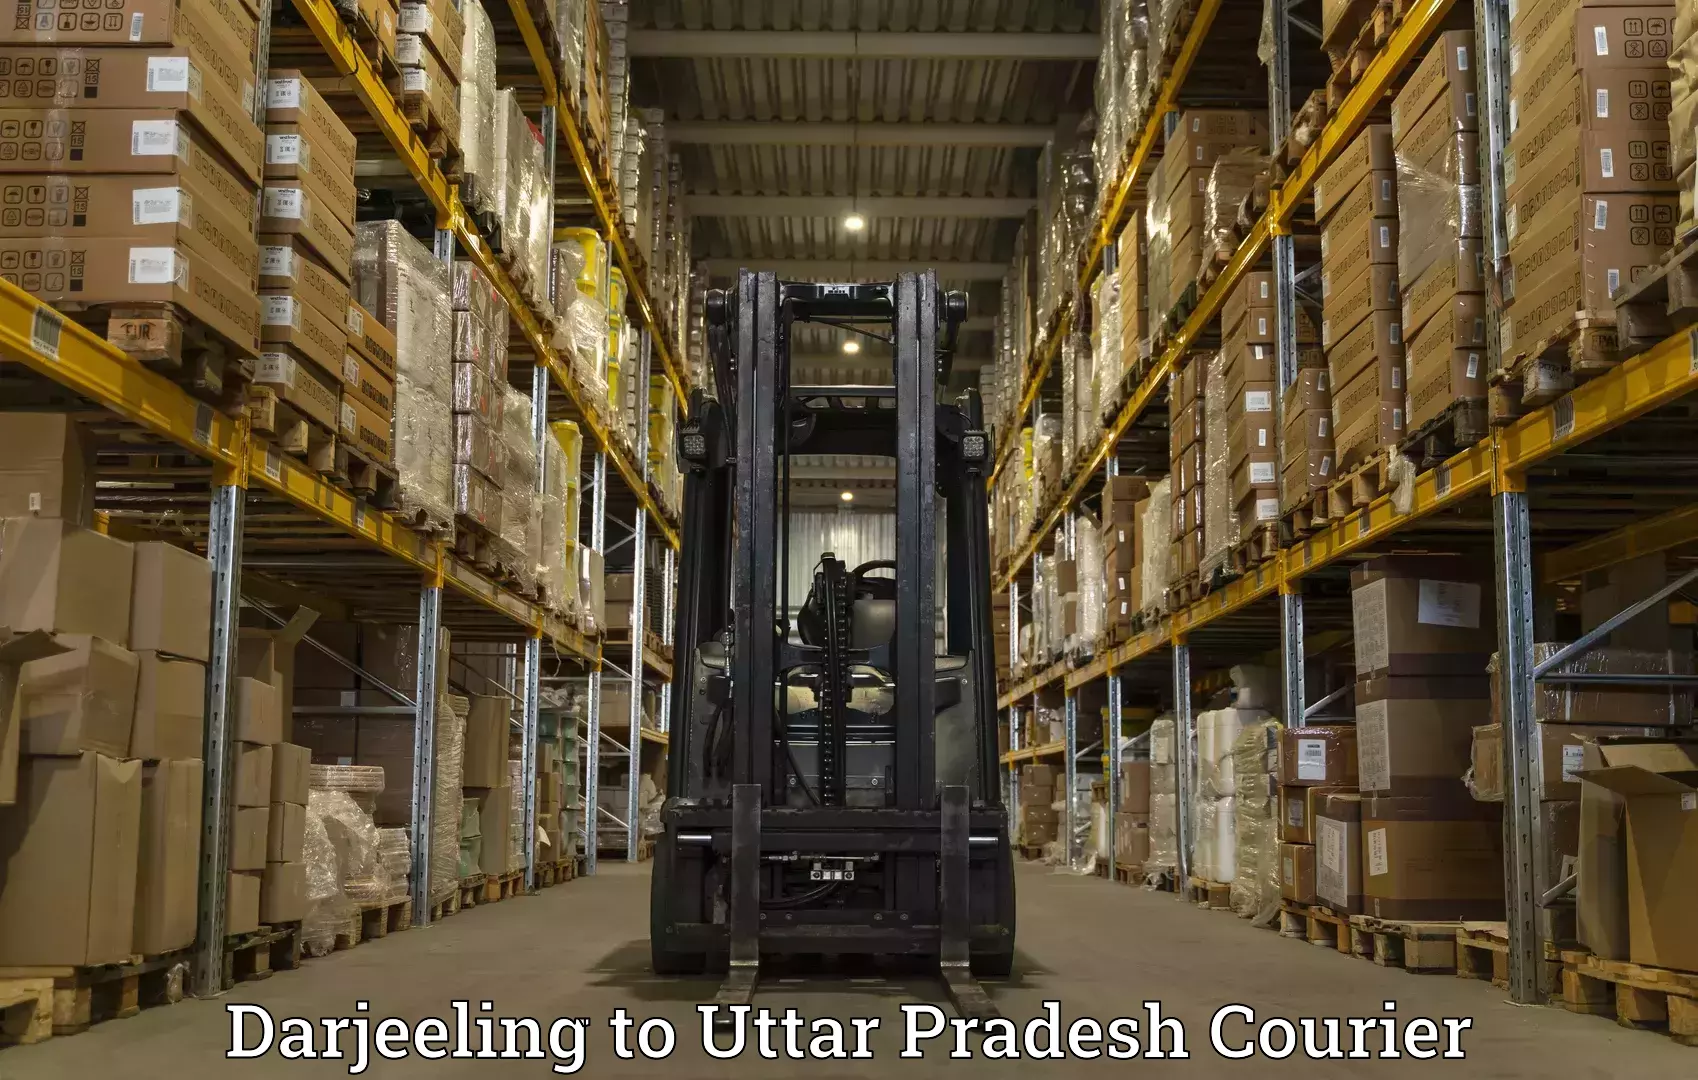 State-of-the-art courier technology Darjeeling to Uttar Pradesh